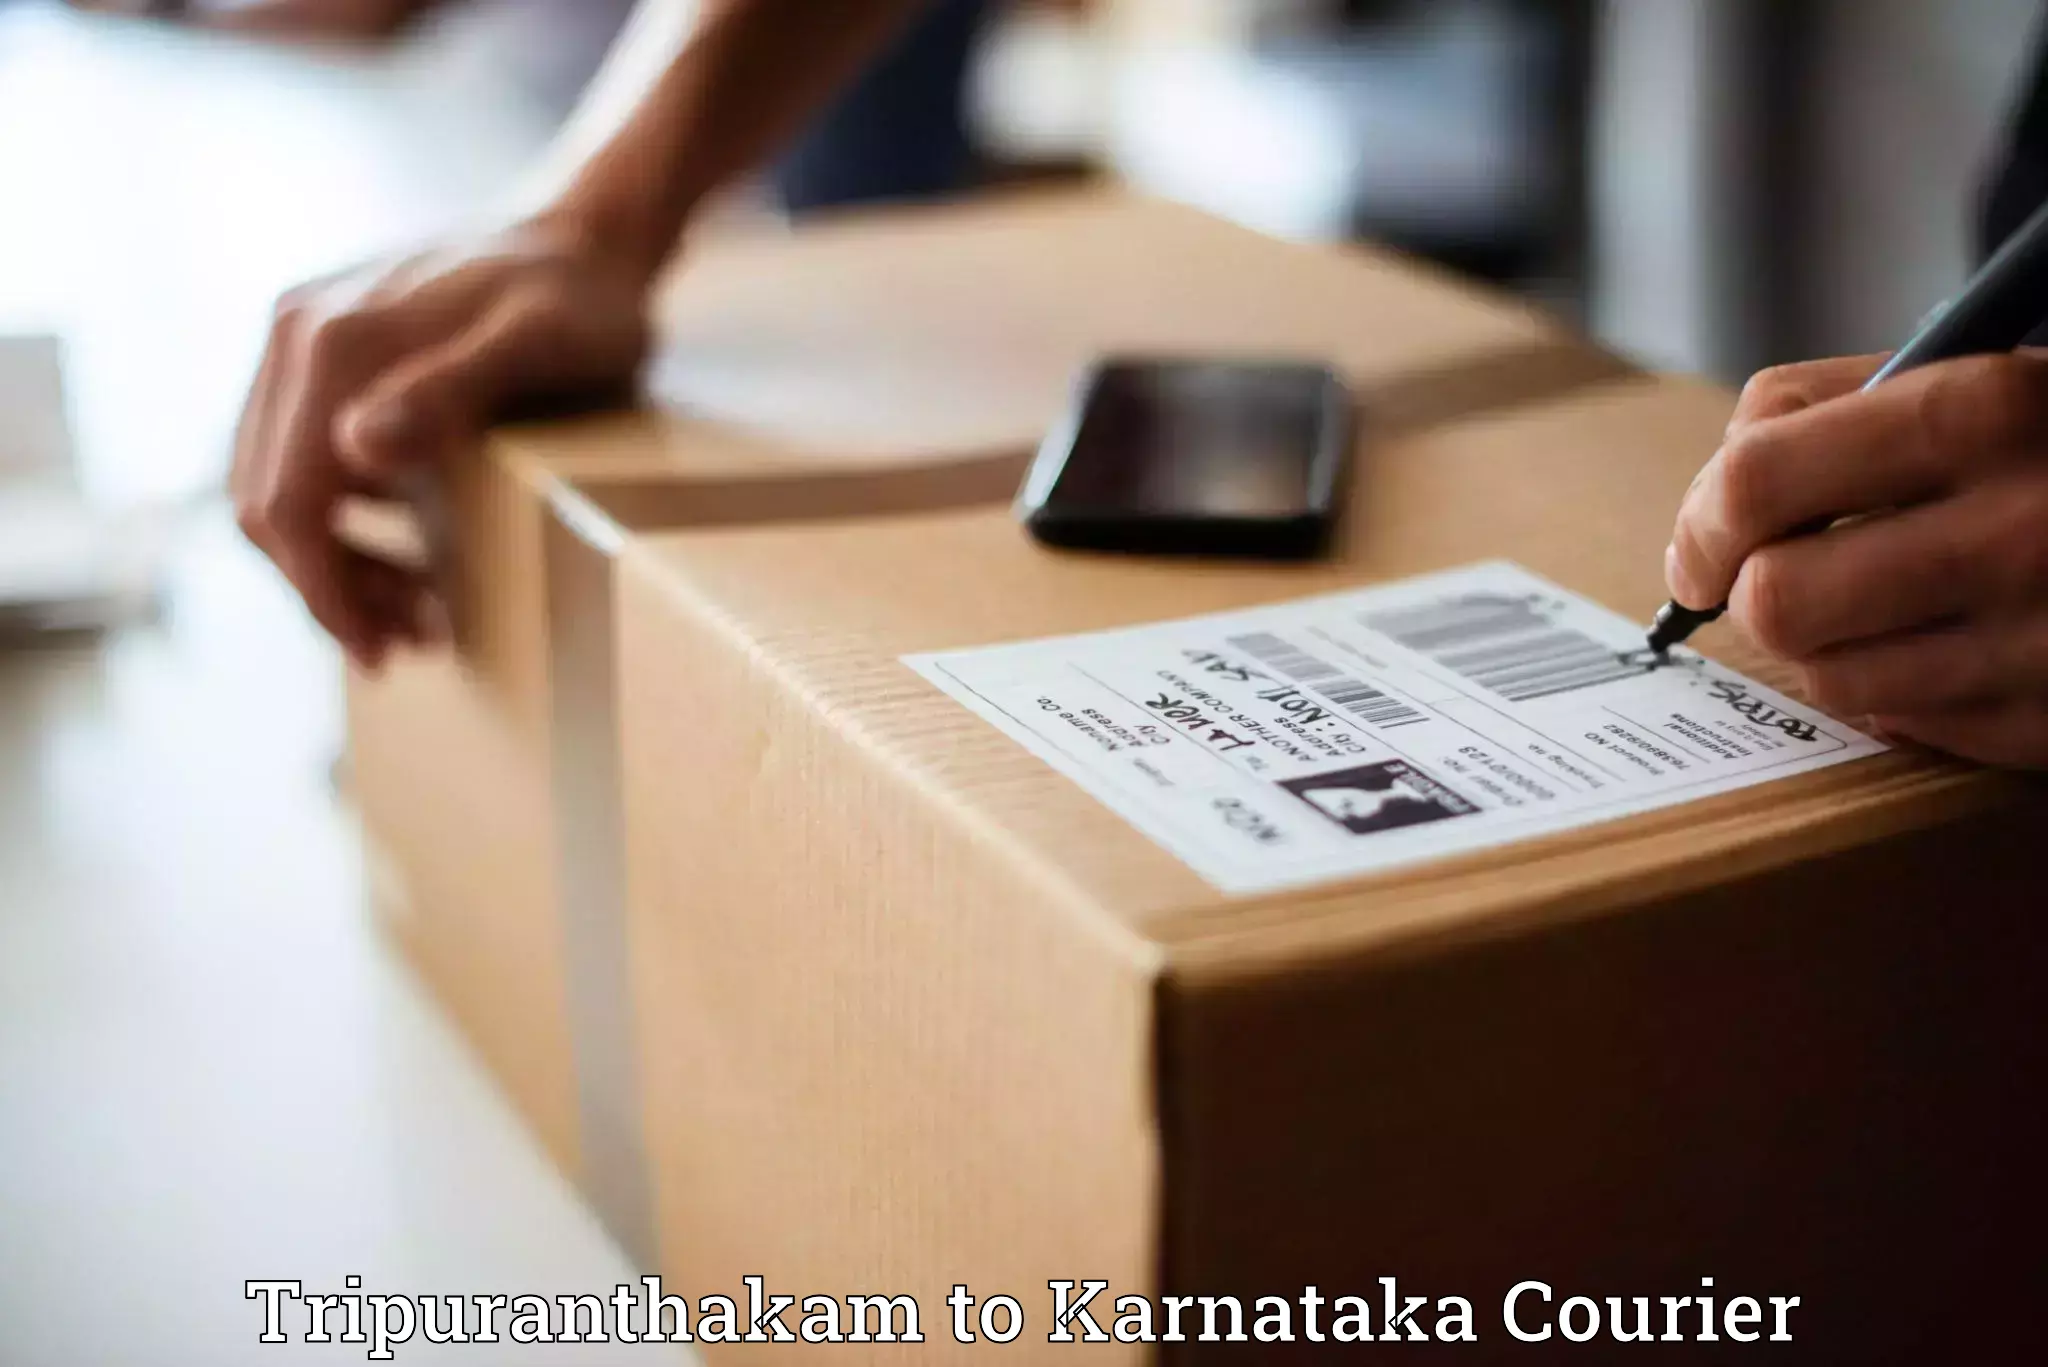 Courier insurance Tripuranthakam to Karnataka